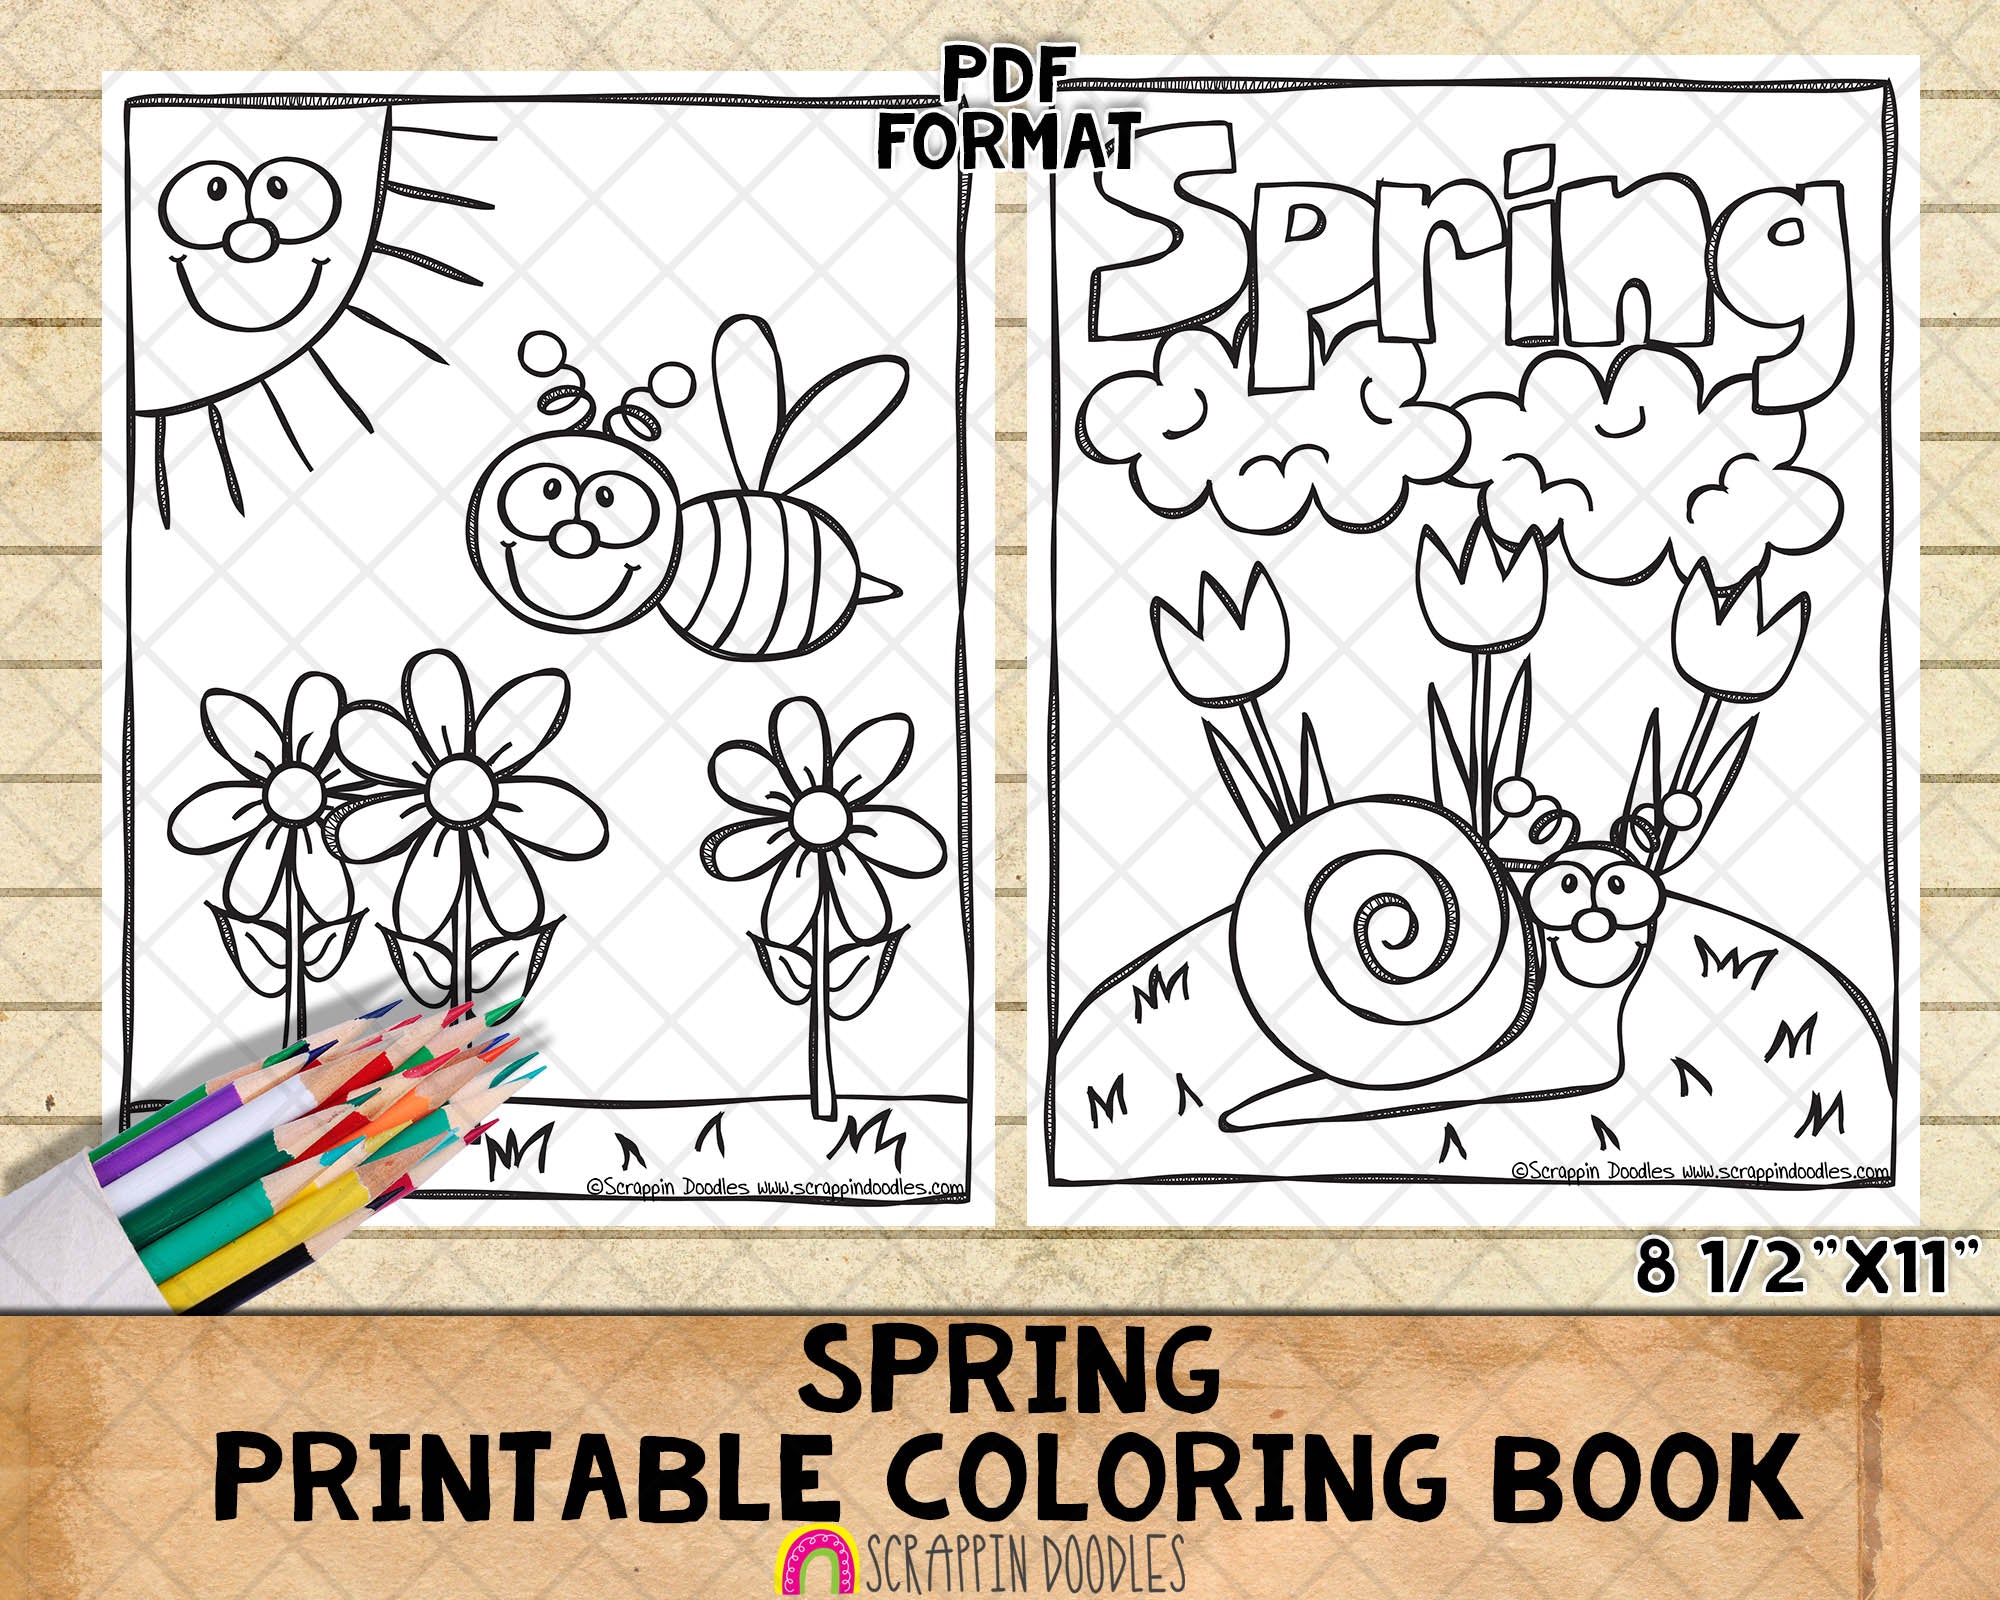 Spring coloring book